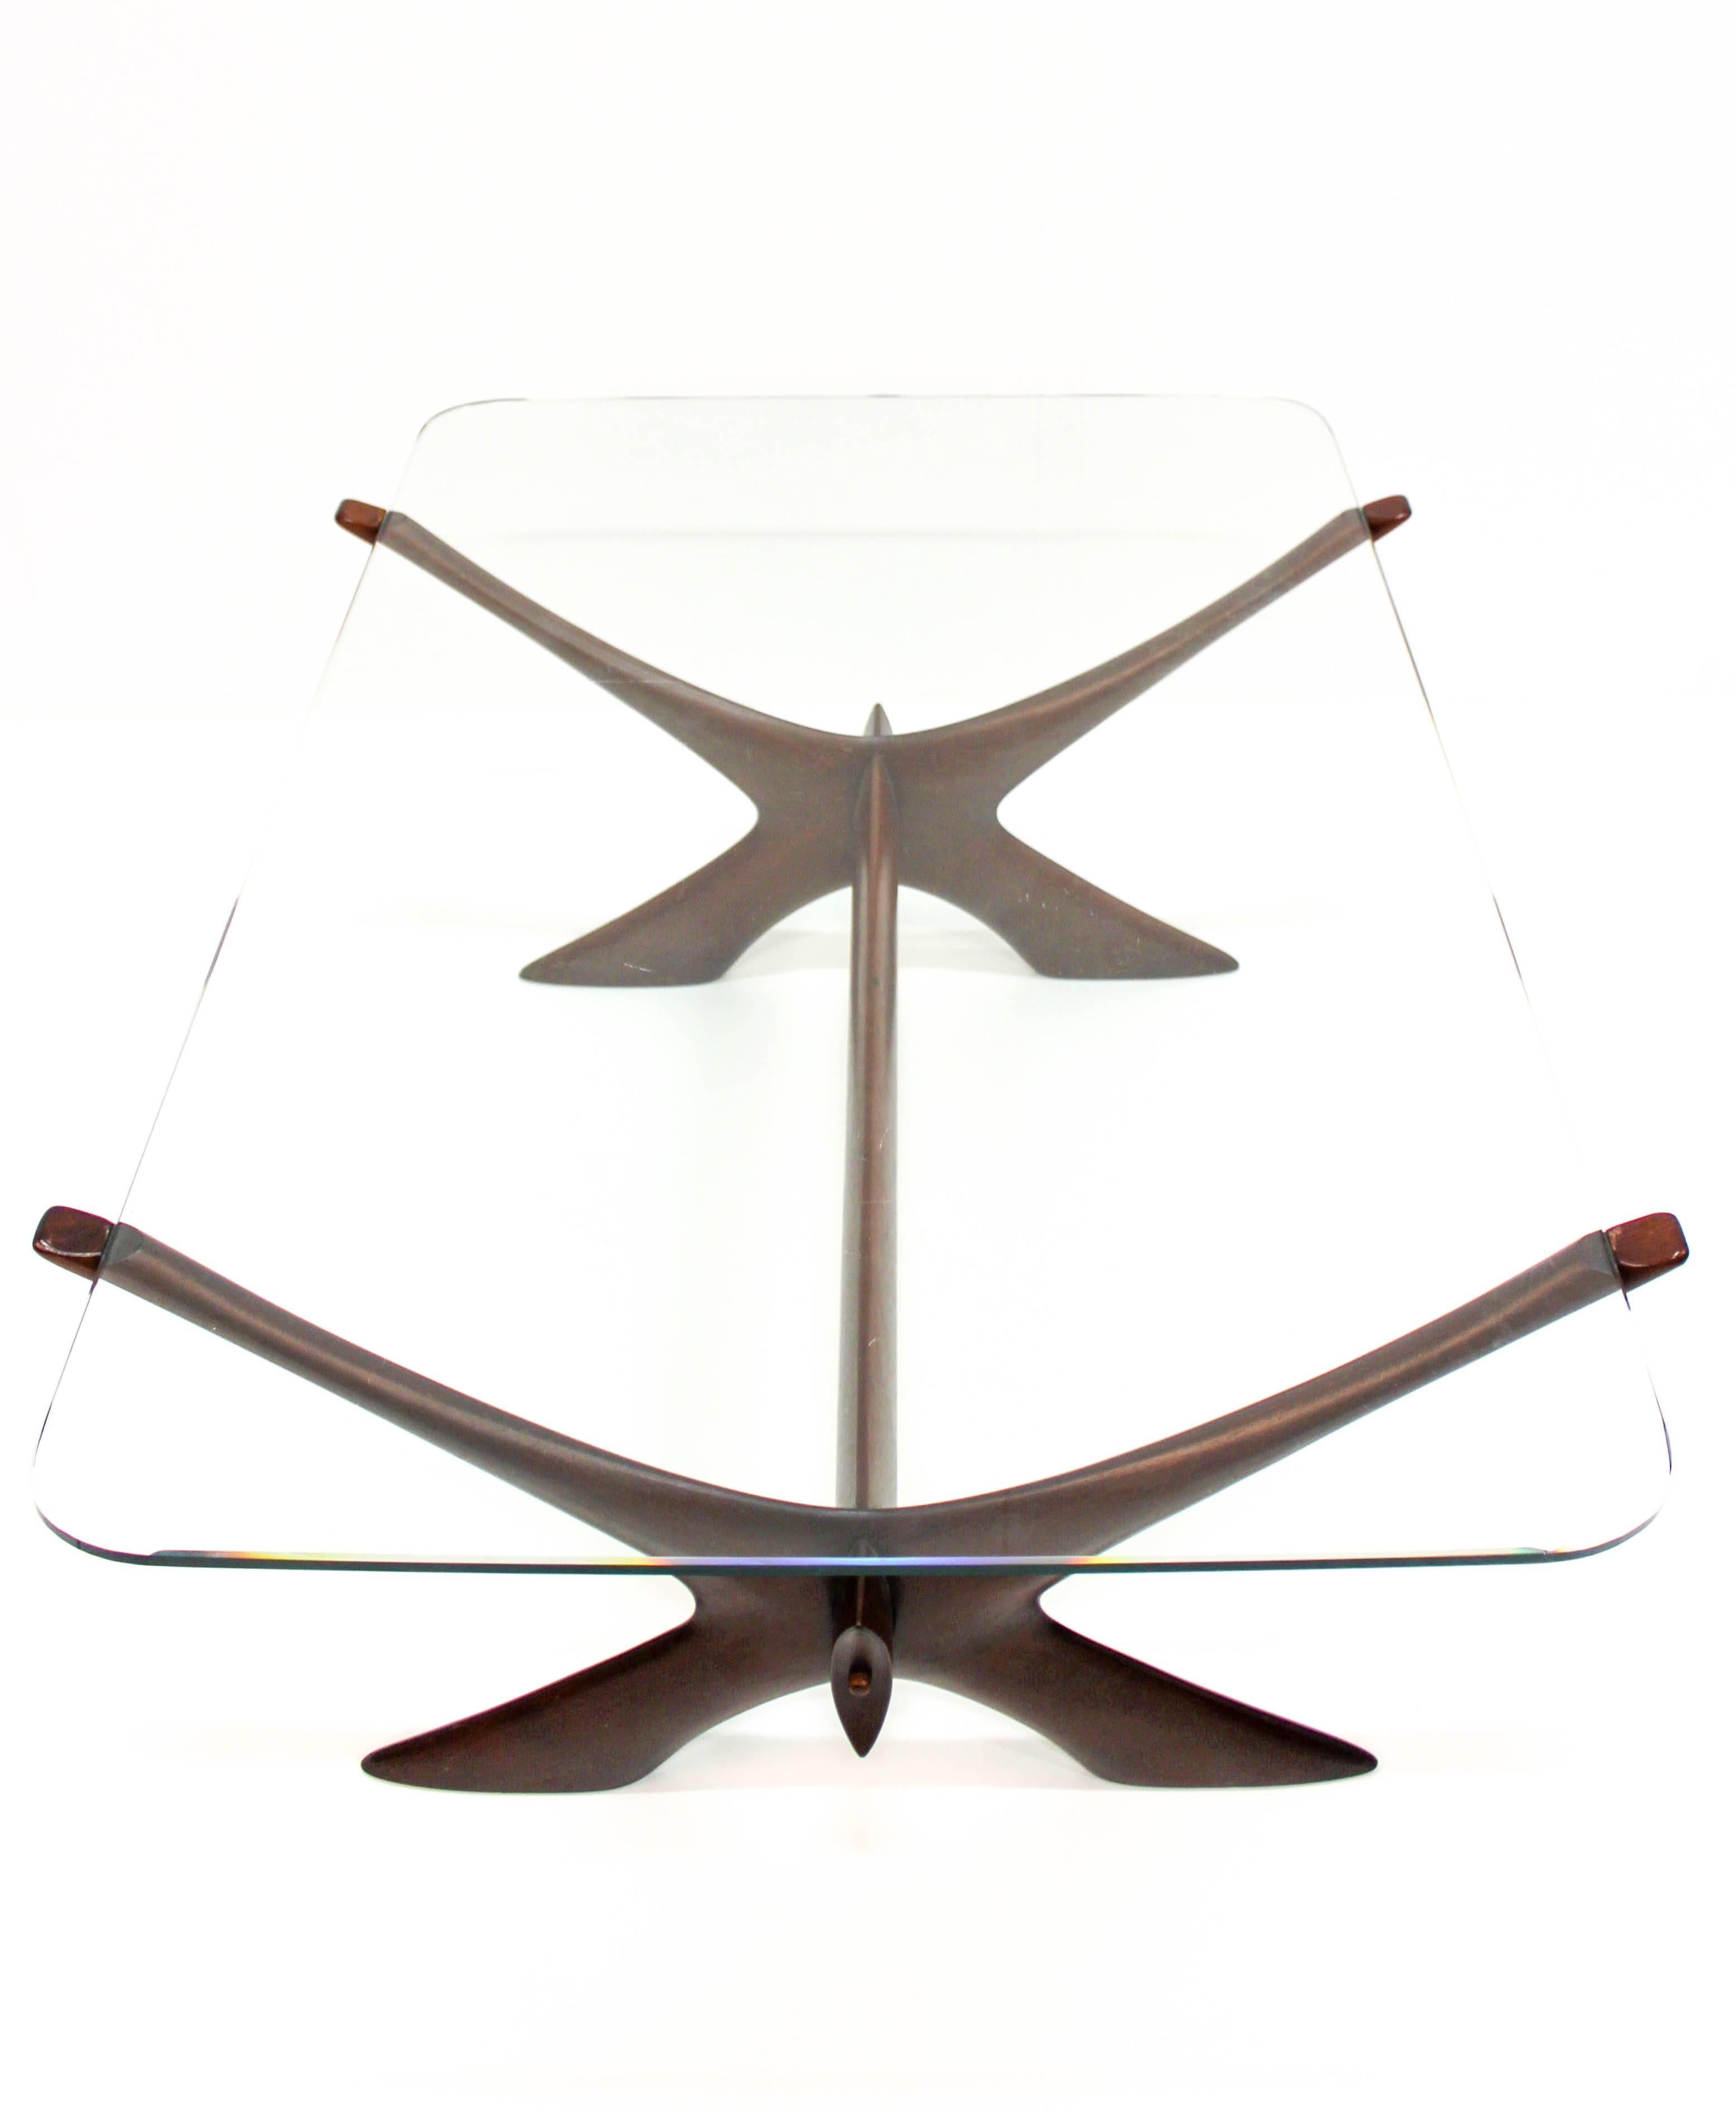 Scandinavian Modern Midcentury Crossed Legs and Glass Top Coffee Table by Fredrik Schriever-Abeln